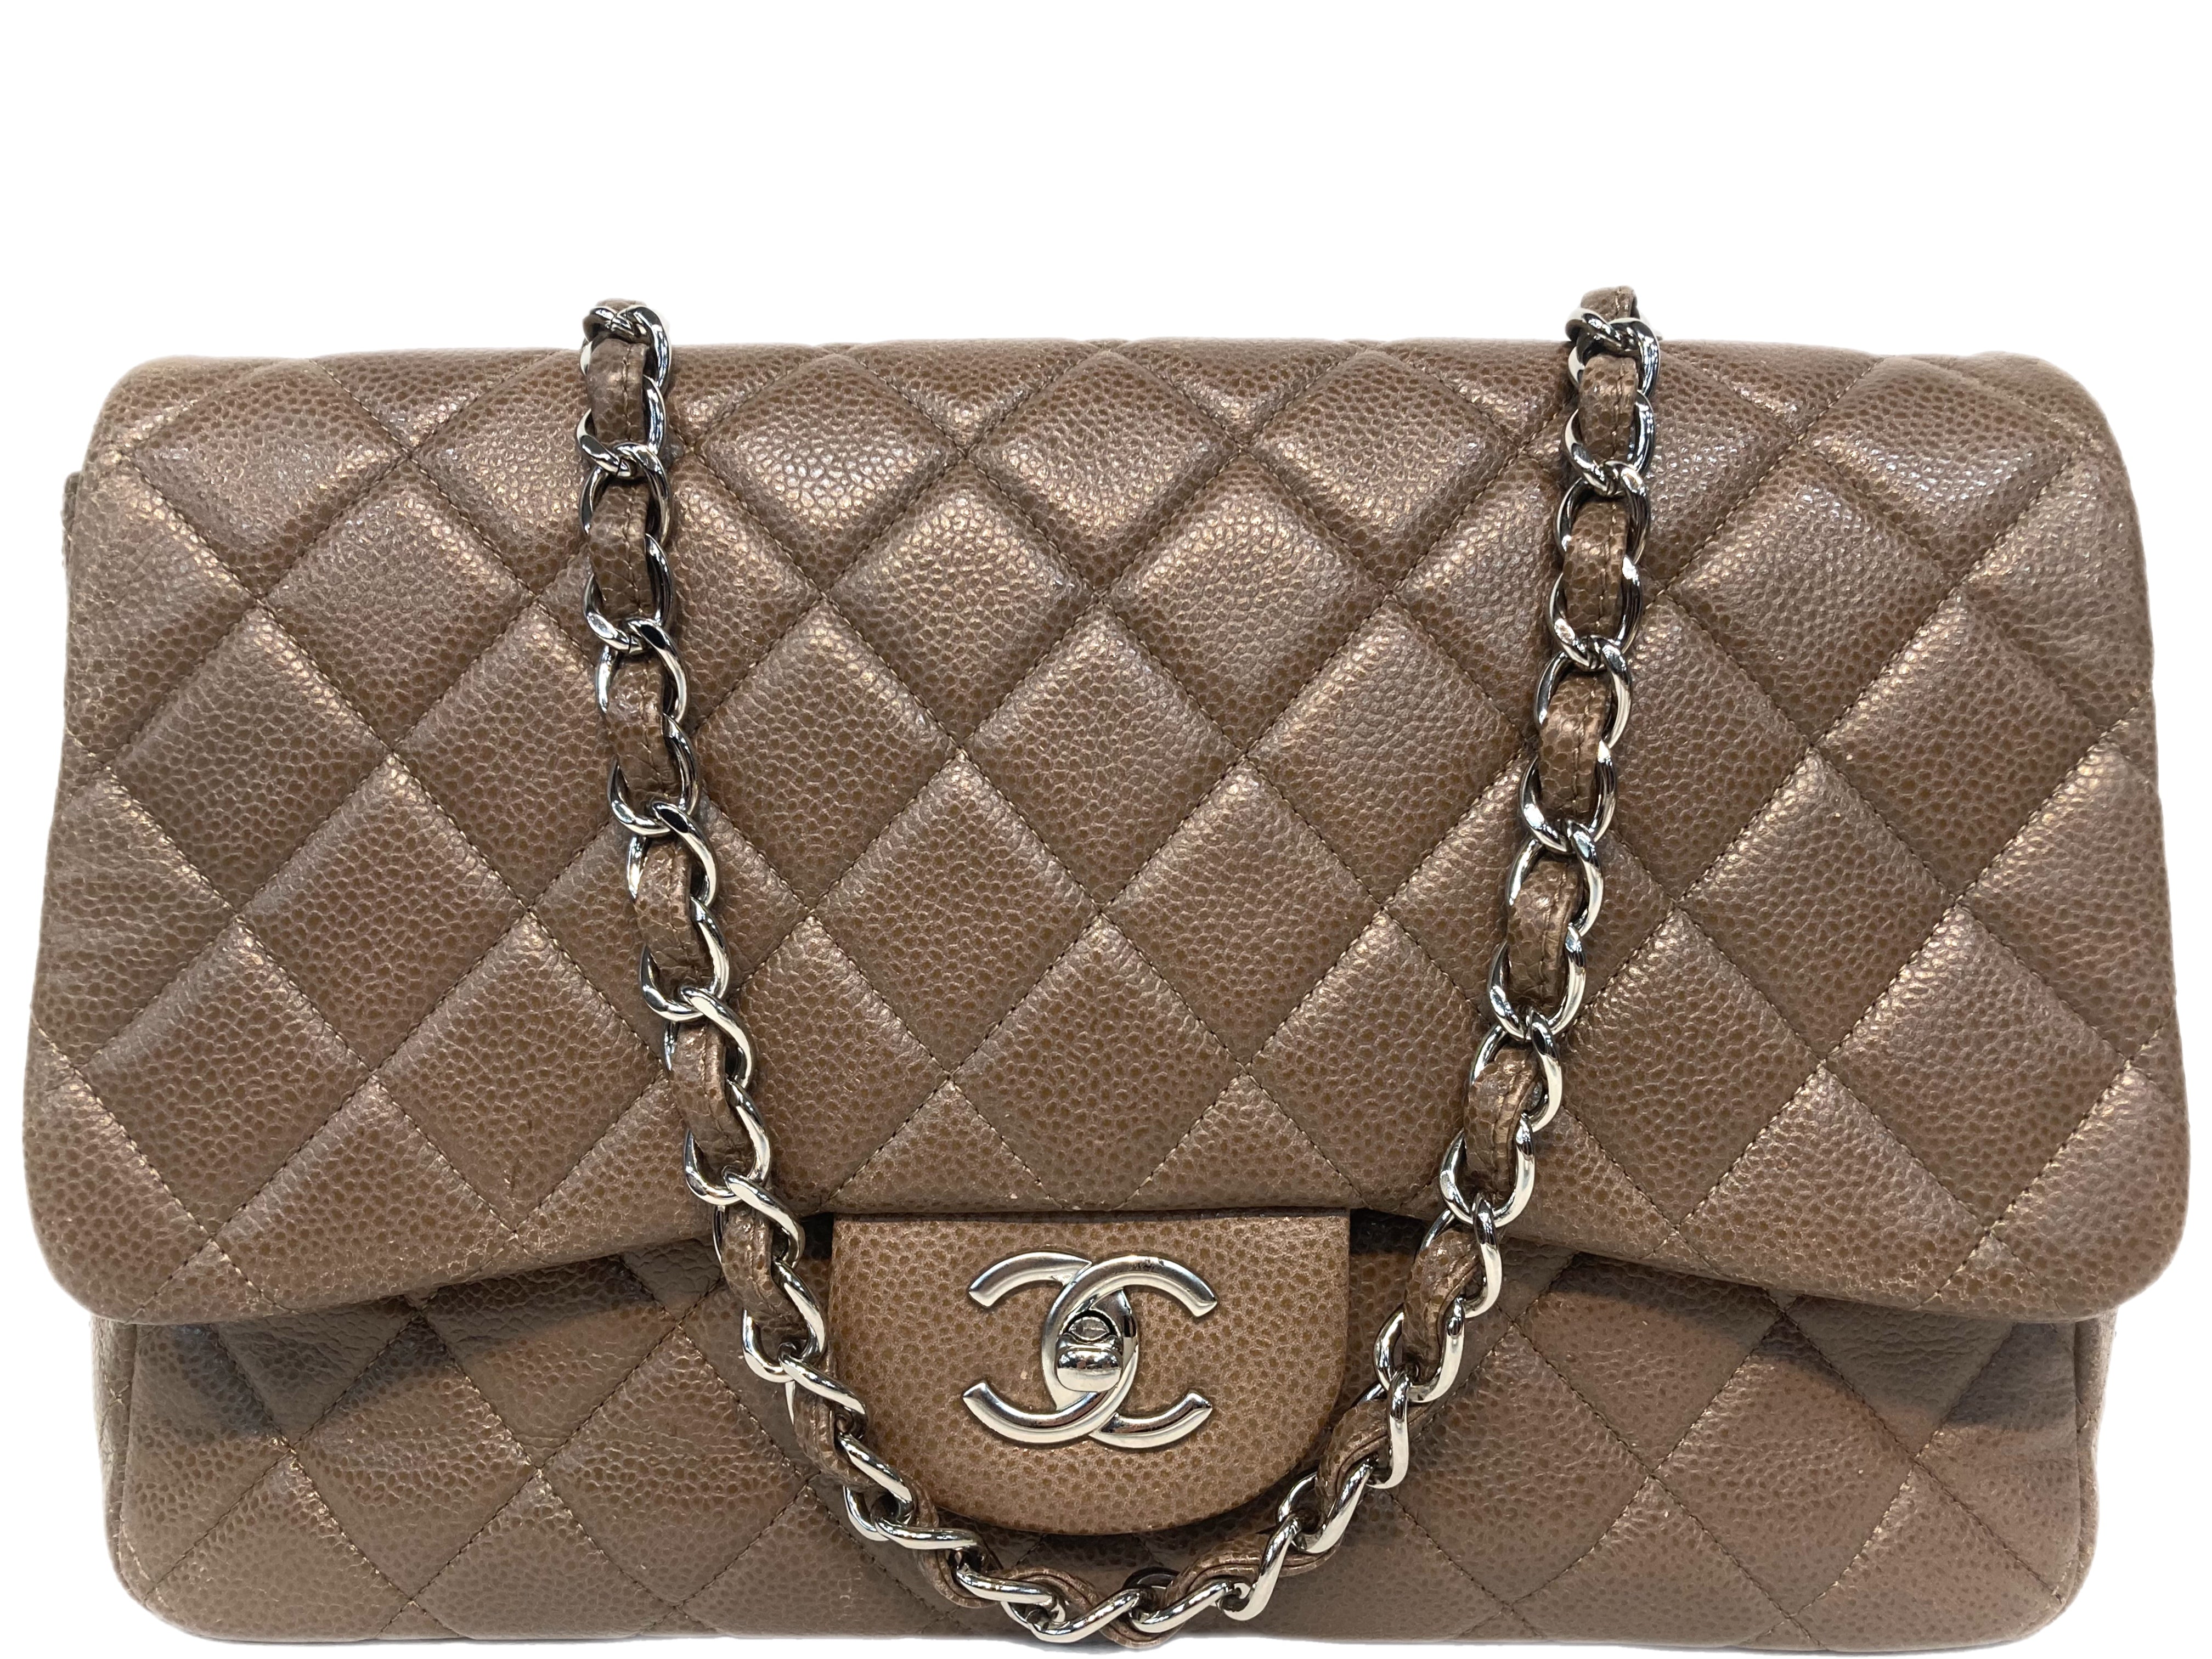 Chanel Beige Caviar Leather Medium Urban Companion Flap Bag Chanel